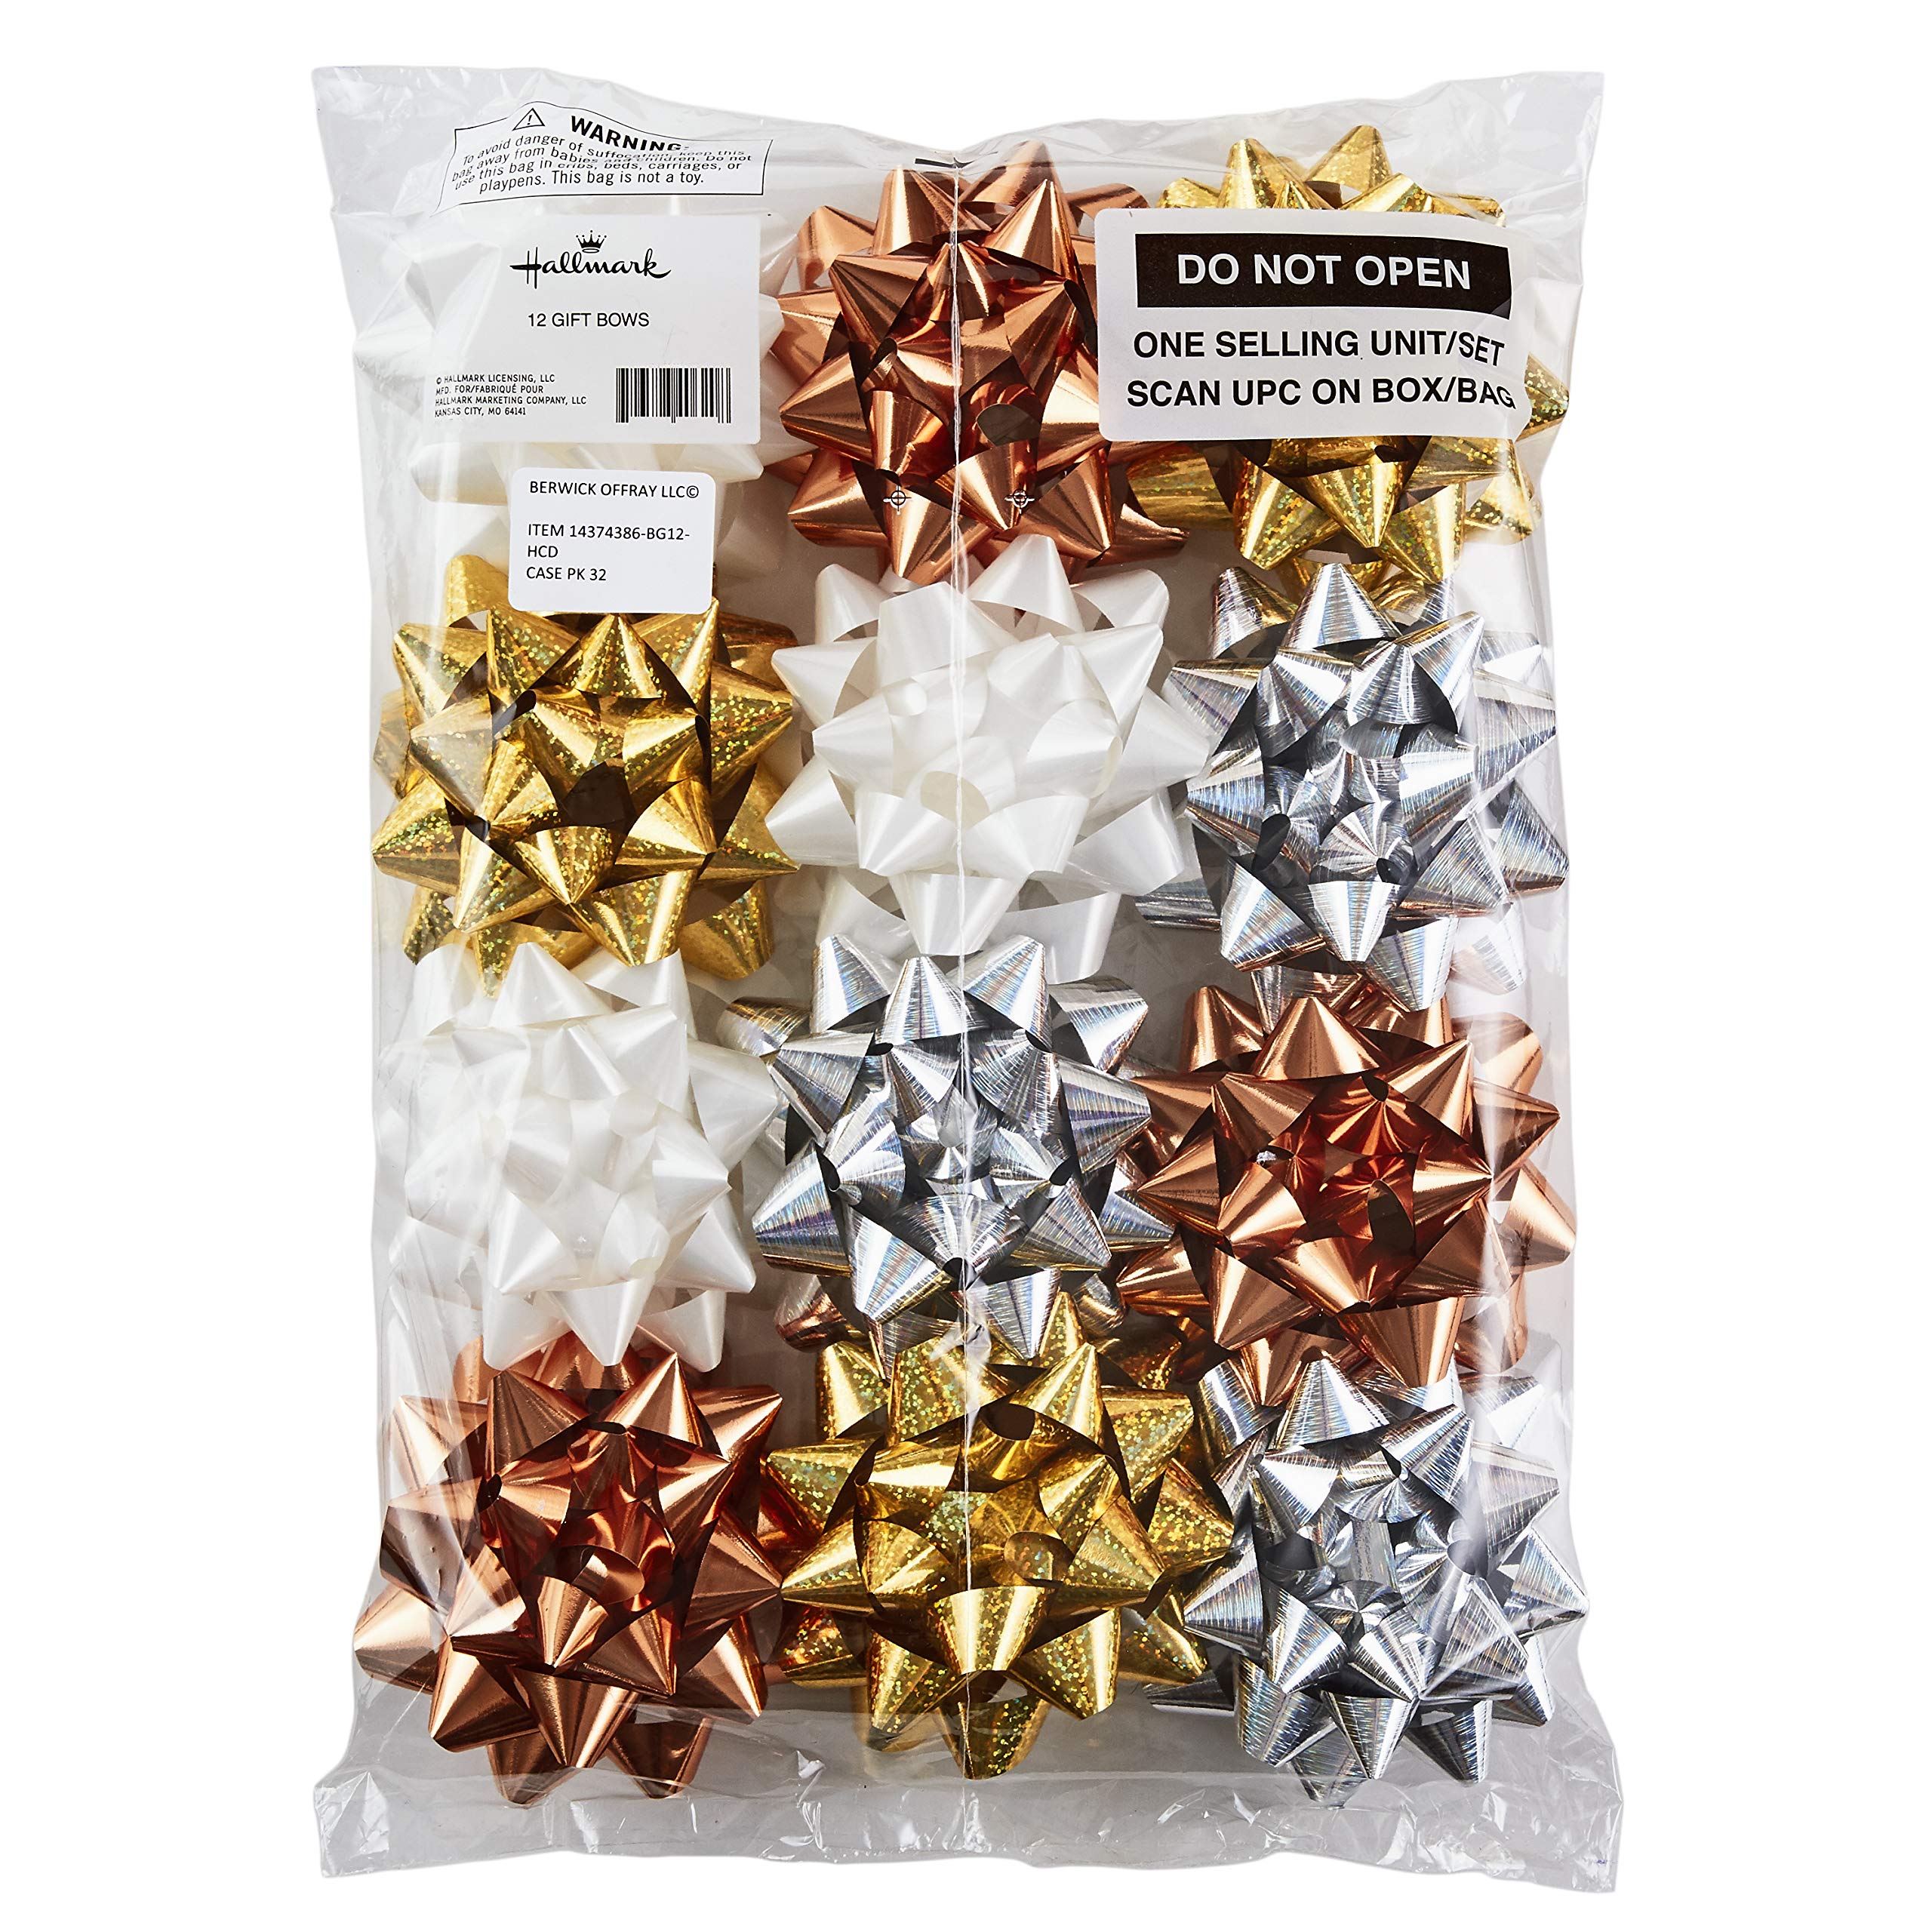 Hallmark Holiday Gift Bow Assortment (12) Gold, Silver, Bronze, White for Christmas, Hanukkah, Birthdays, Weddings, Bridal Showers